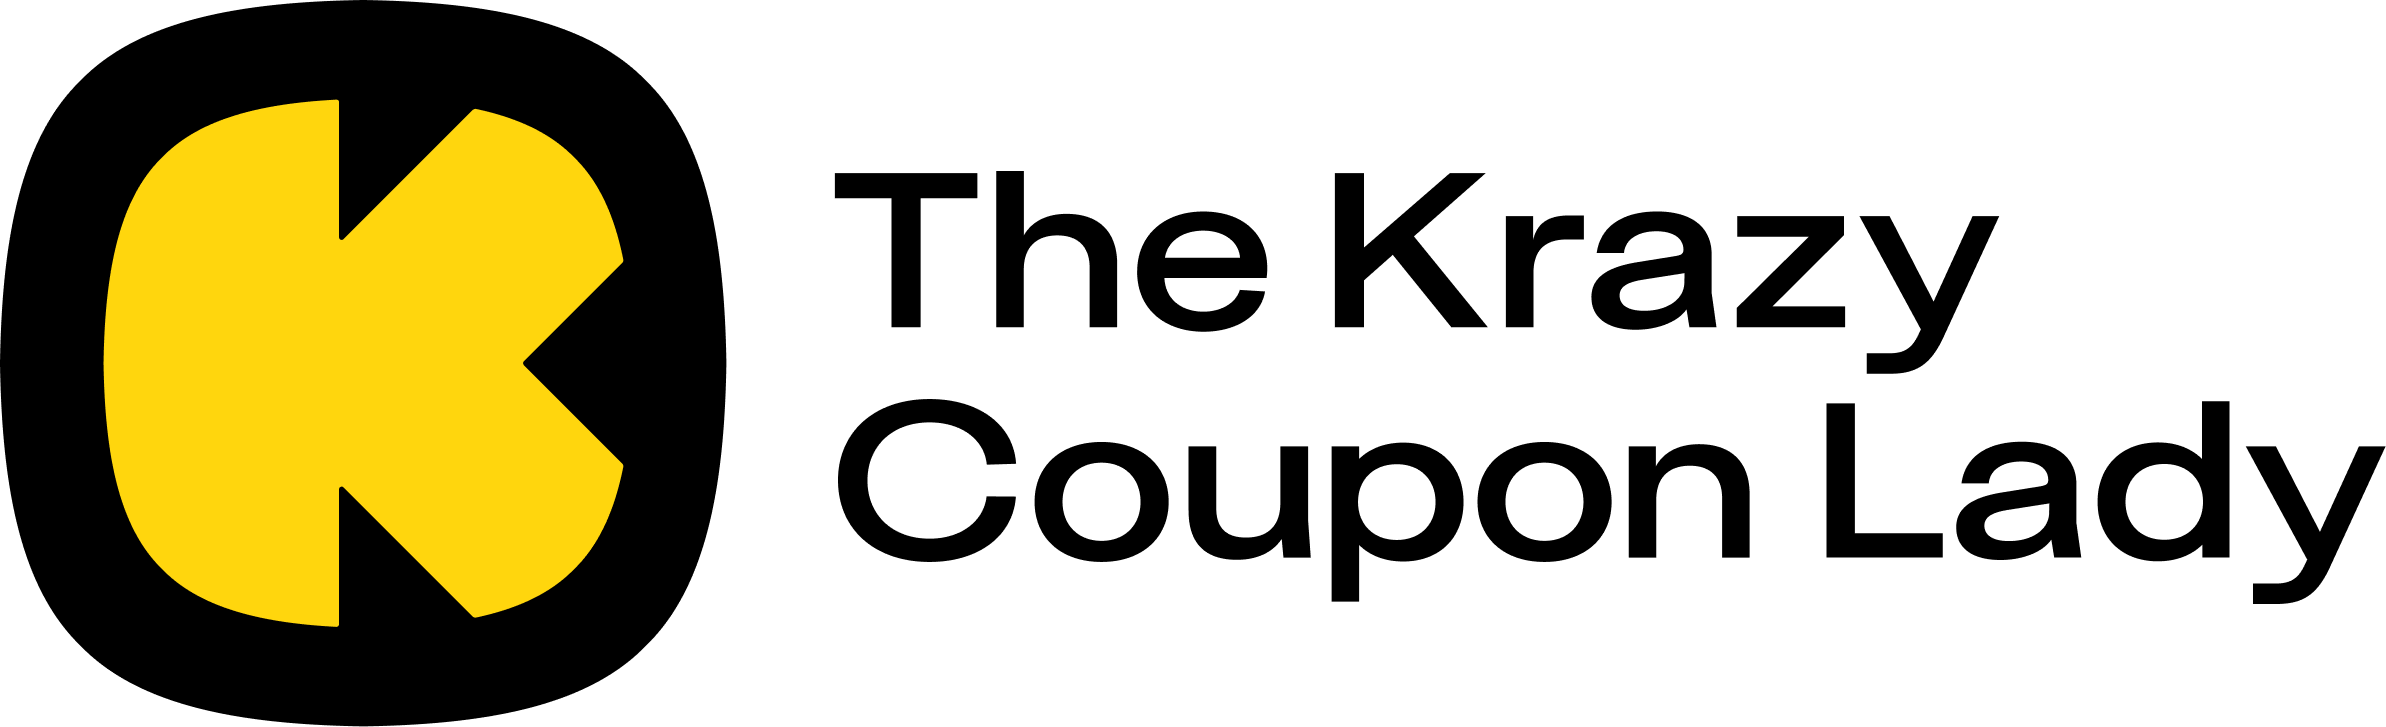 Cricut Sales & Money-Saving Tips - The Krazy Coupon Lady